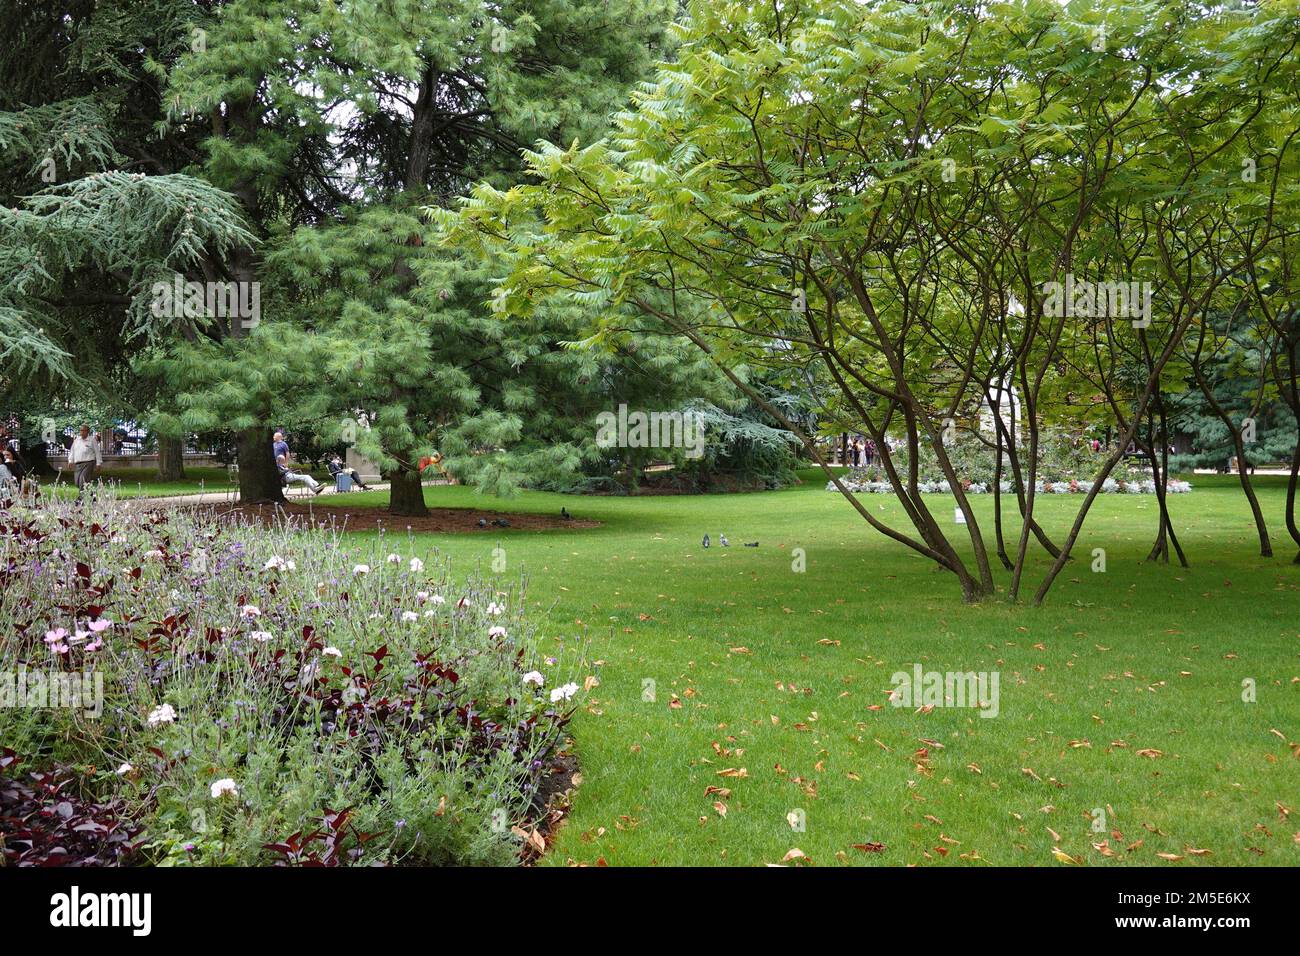 Frankreich, Paris, 6. Arrondissement, Jardin du Luxembourg - Luxembourg Garden Photo © Fabio Mazzarella/Sintesi/Alamy Stock Photo Stockfoto